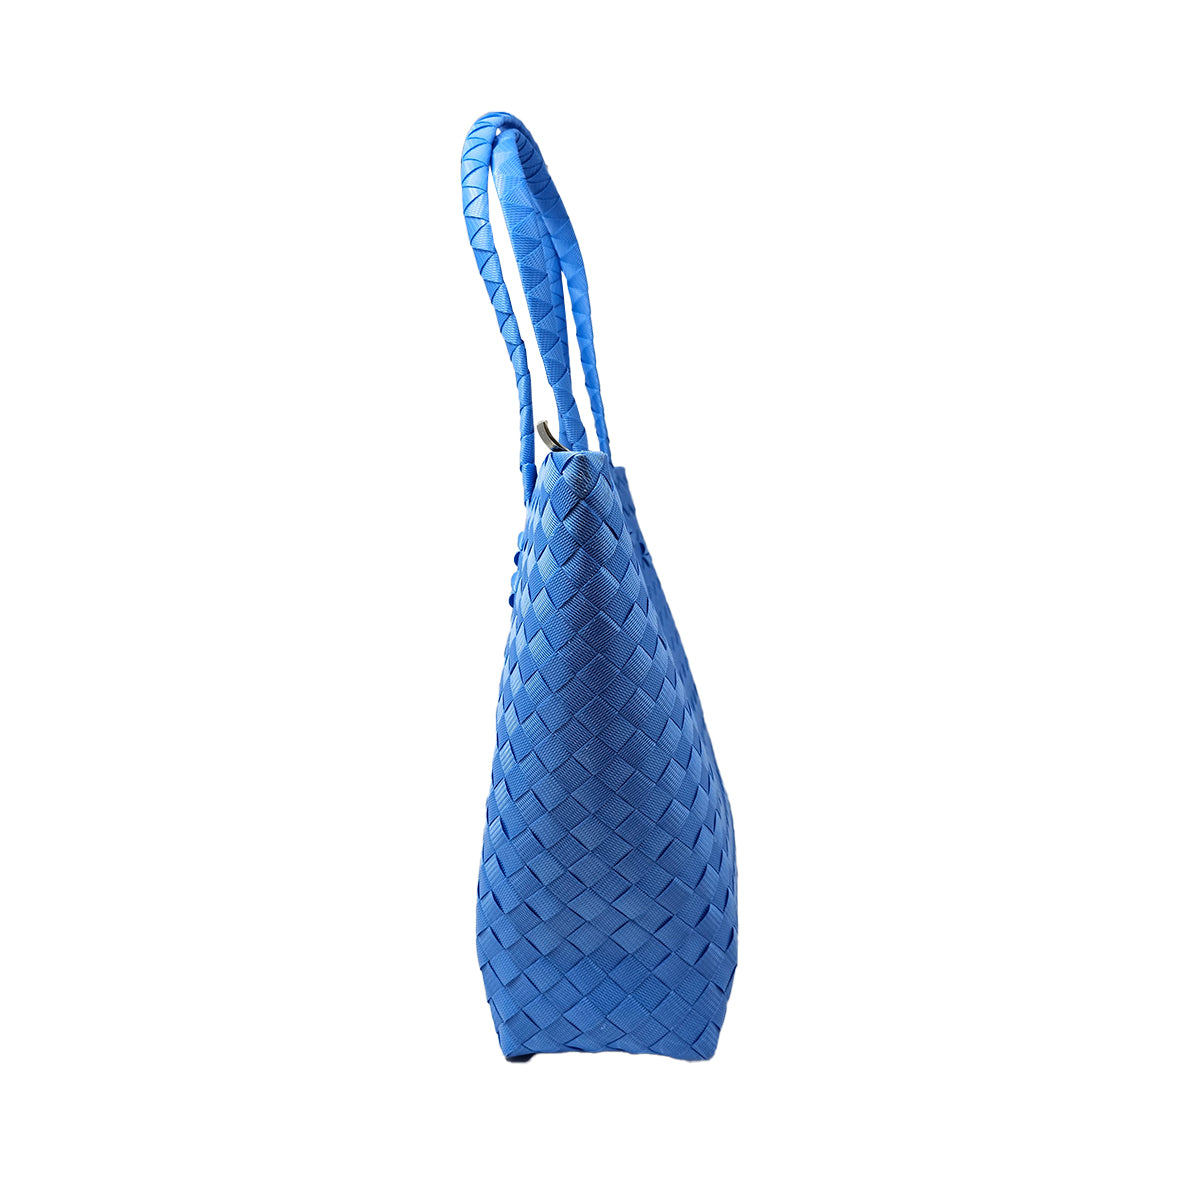 Misenka Handicrafts Philippine Bayong Azure Blue Go with Zipper Bag - SALE 50% OFF